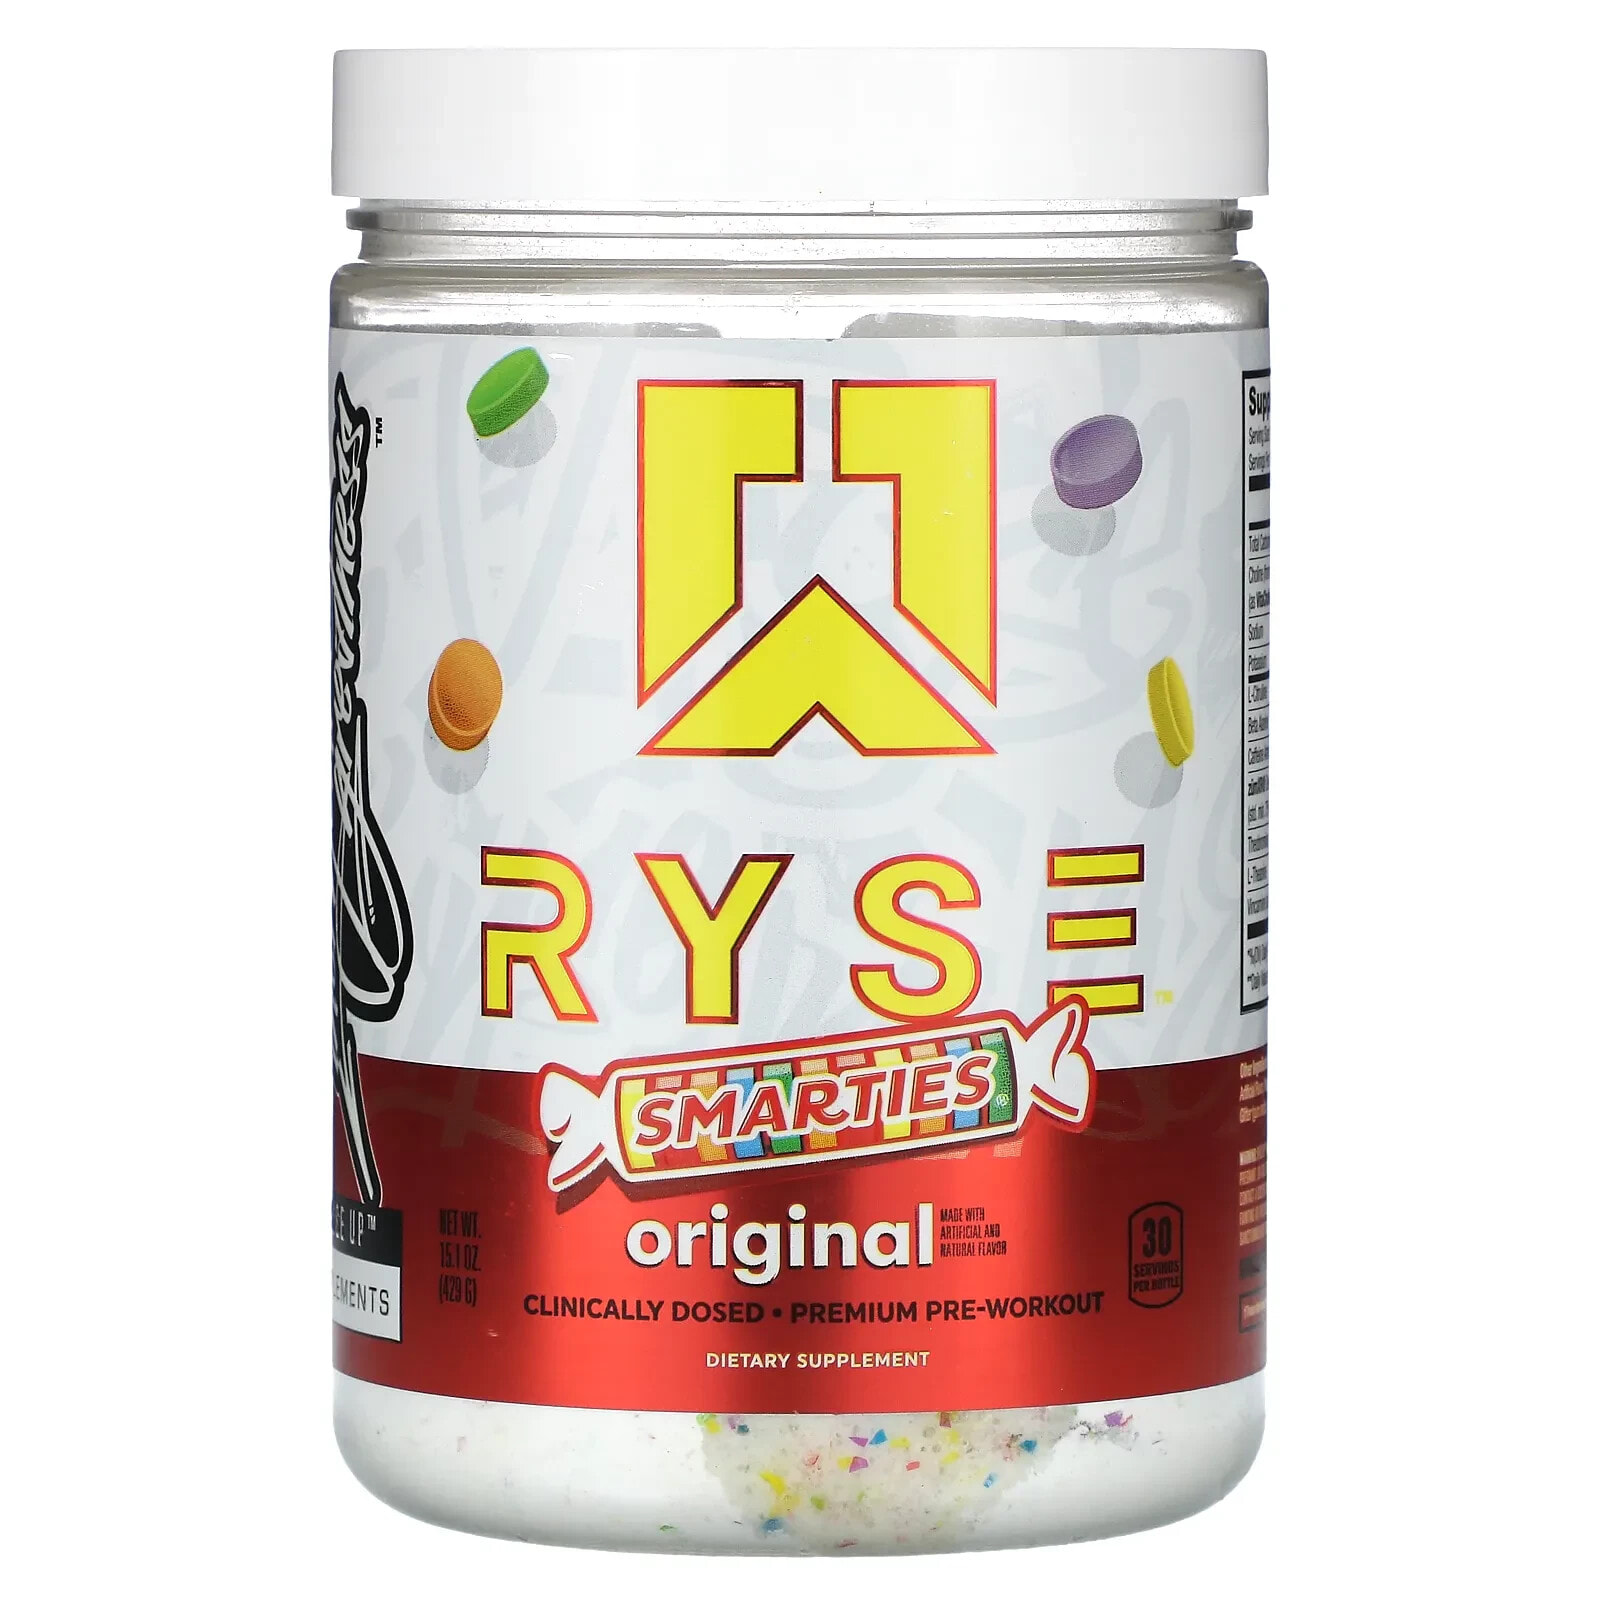 Ryse Supps, Premium Pre-Workout, Smarties, Original, 15.1 oz (429 g)